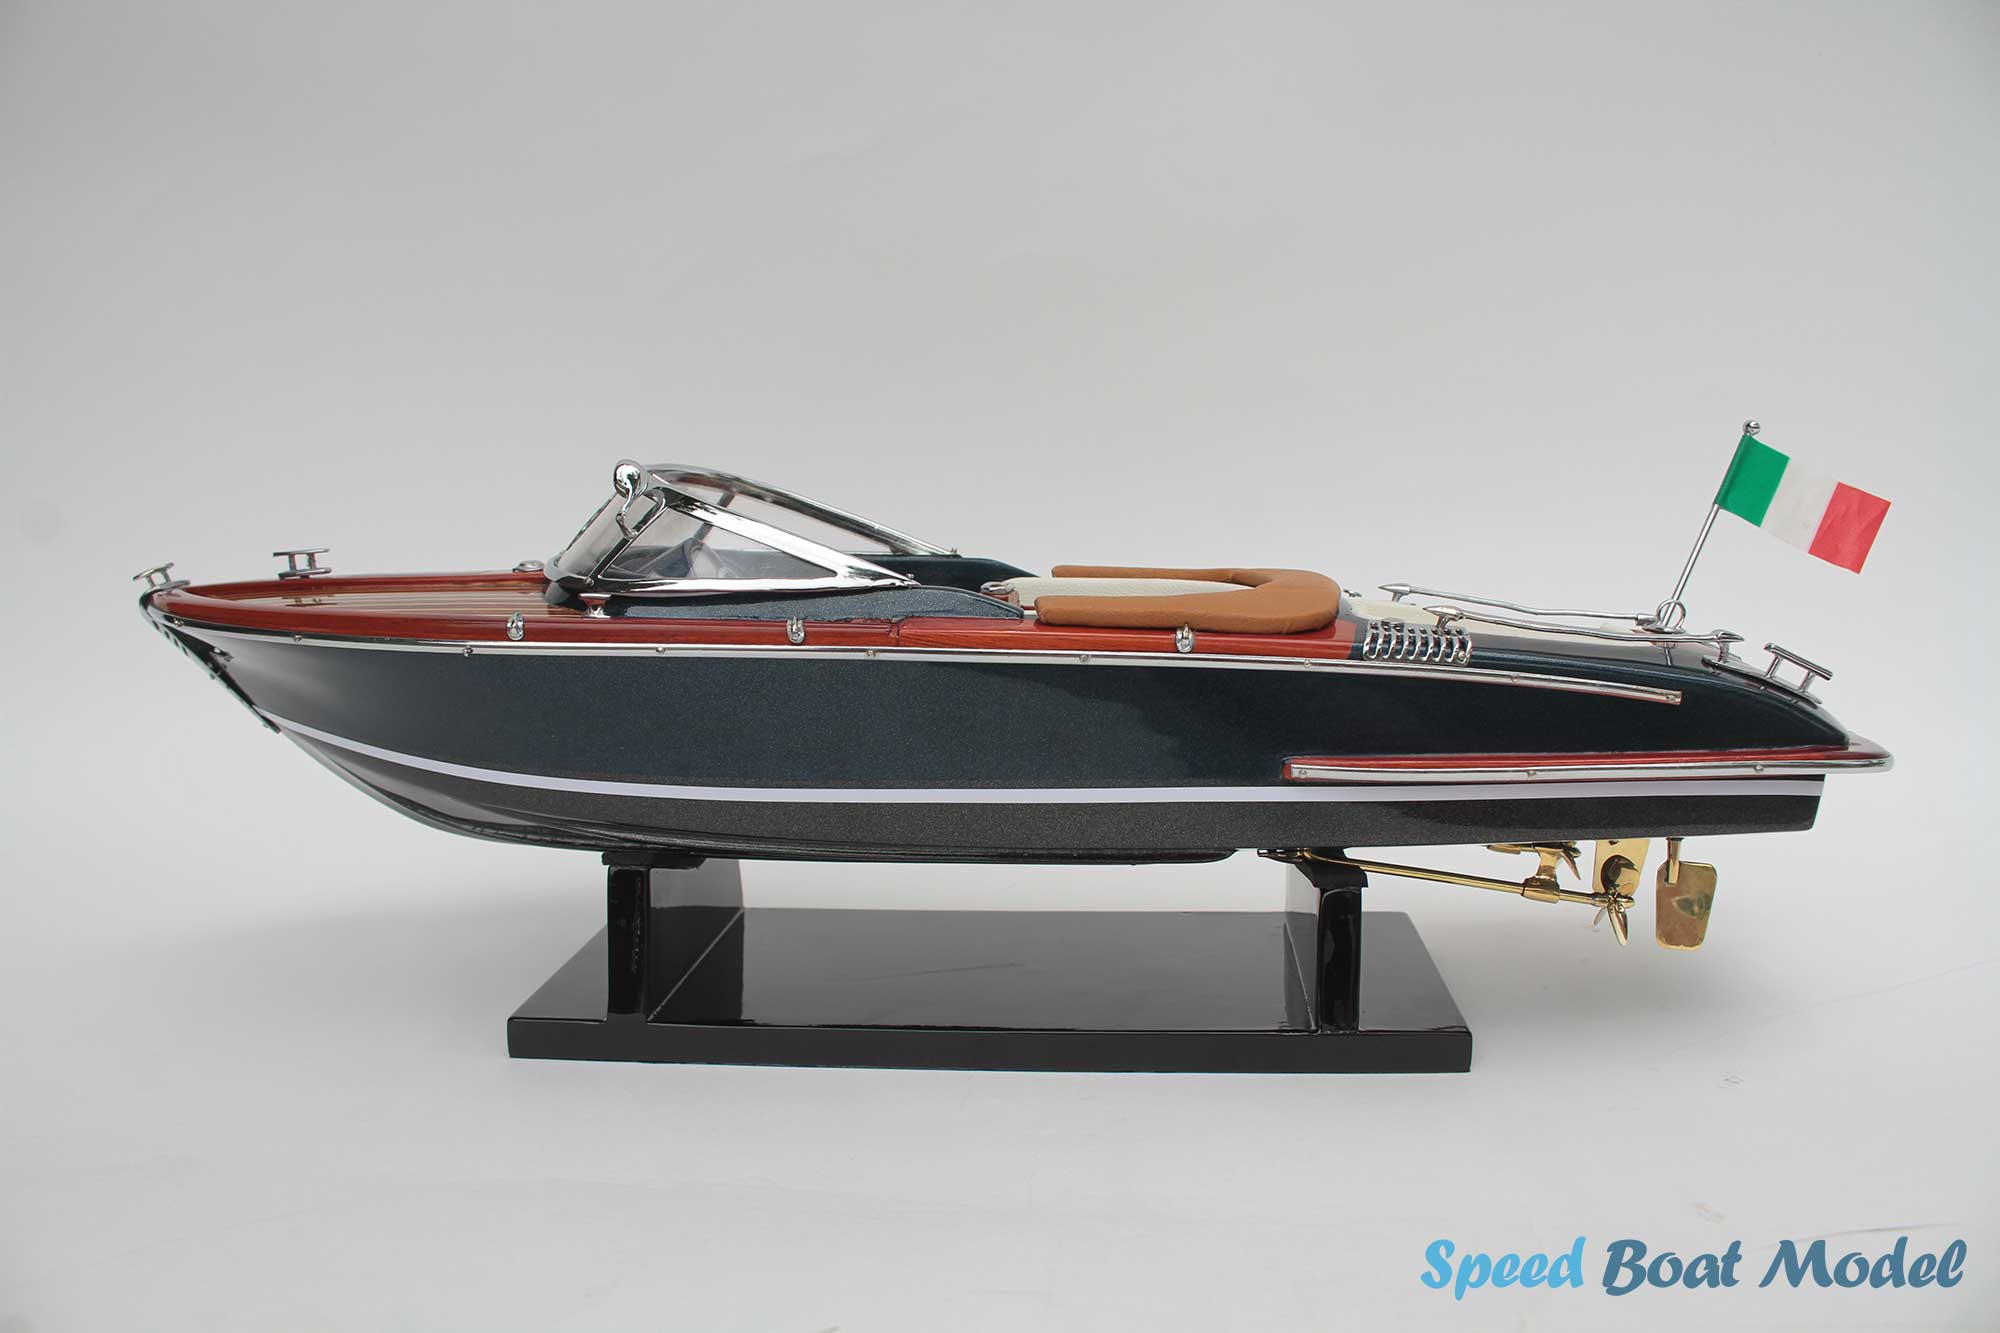 Italian Riva Aquariva Gucci Speed Boat Model 16.5